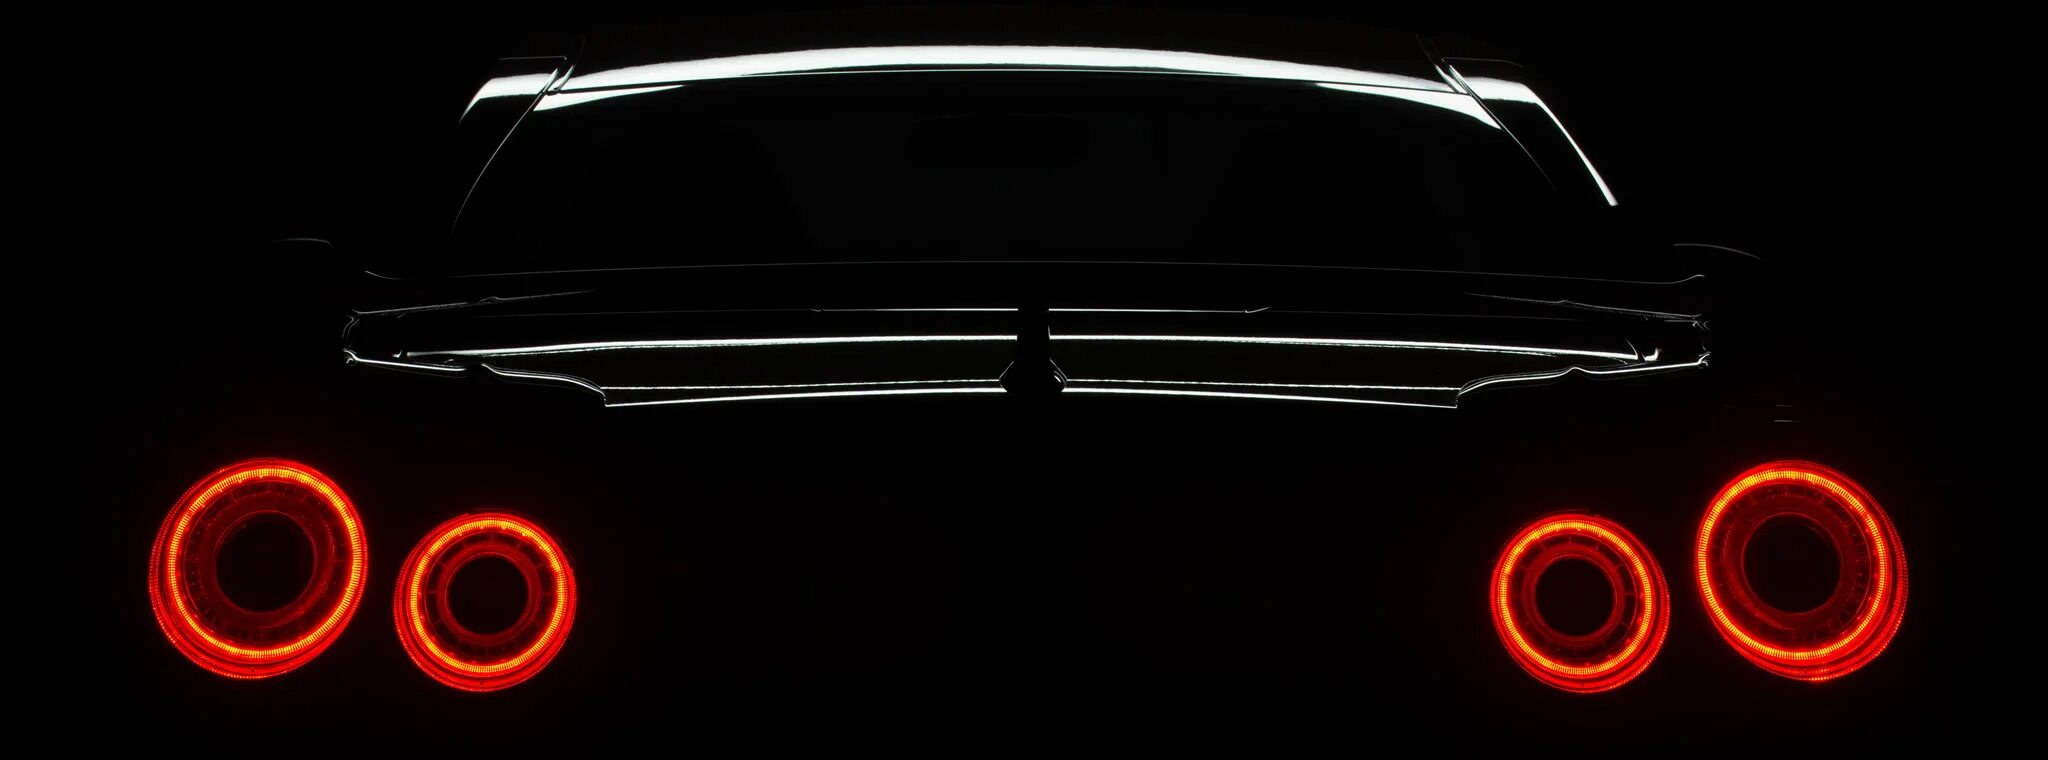 В темноте 34. Skyline GTR 34 задние фары. Задние фары ГТР 34. Skyline r34 GTR фары задние ночью. Фары Nissan Skyline r34.